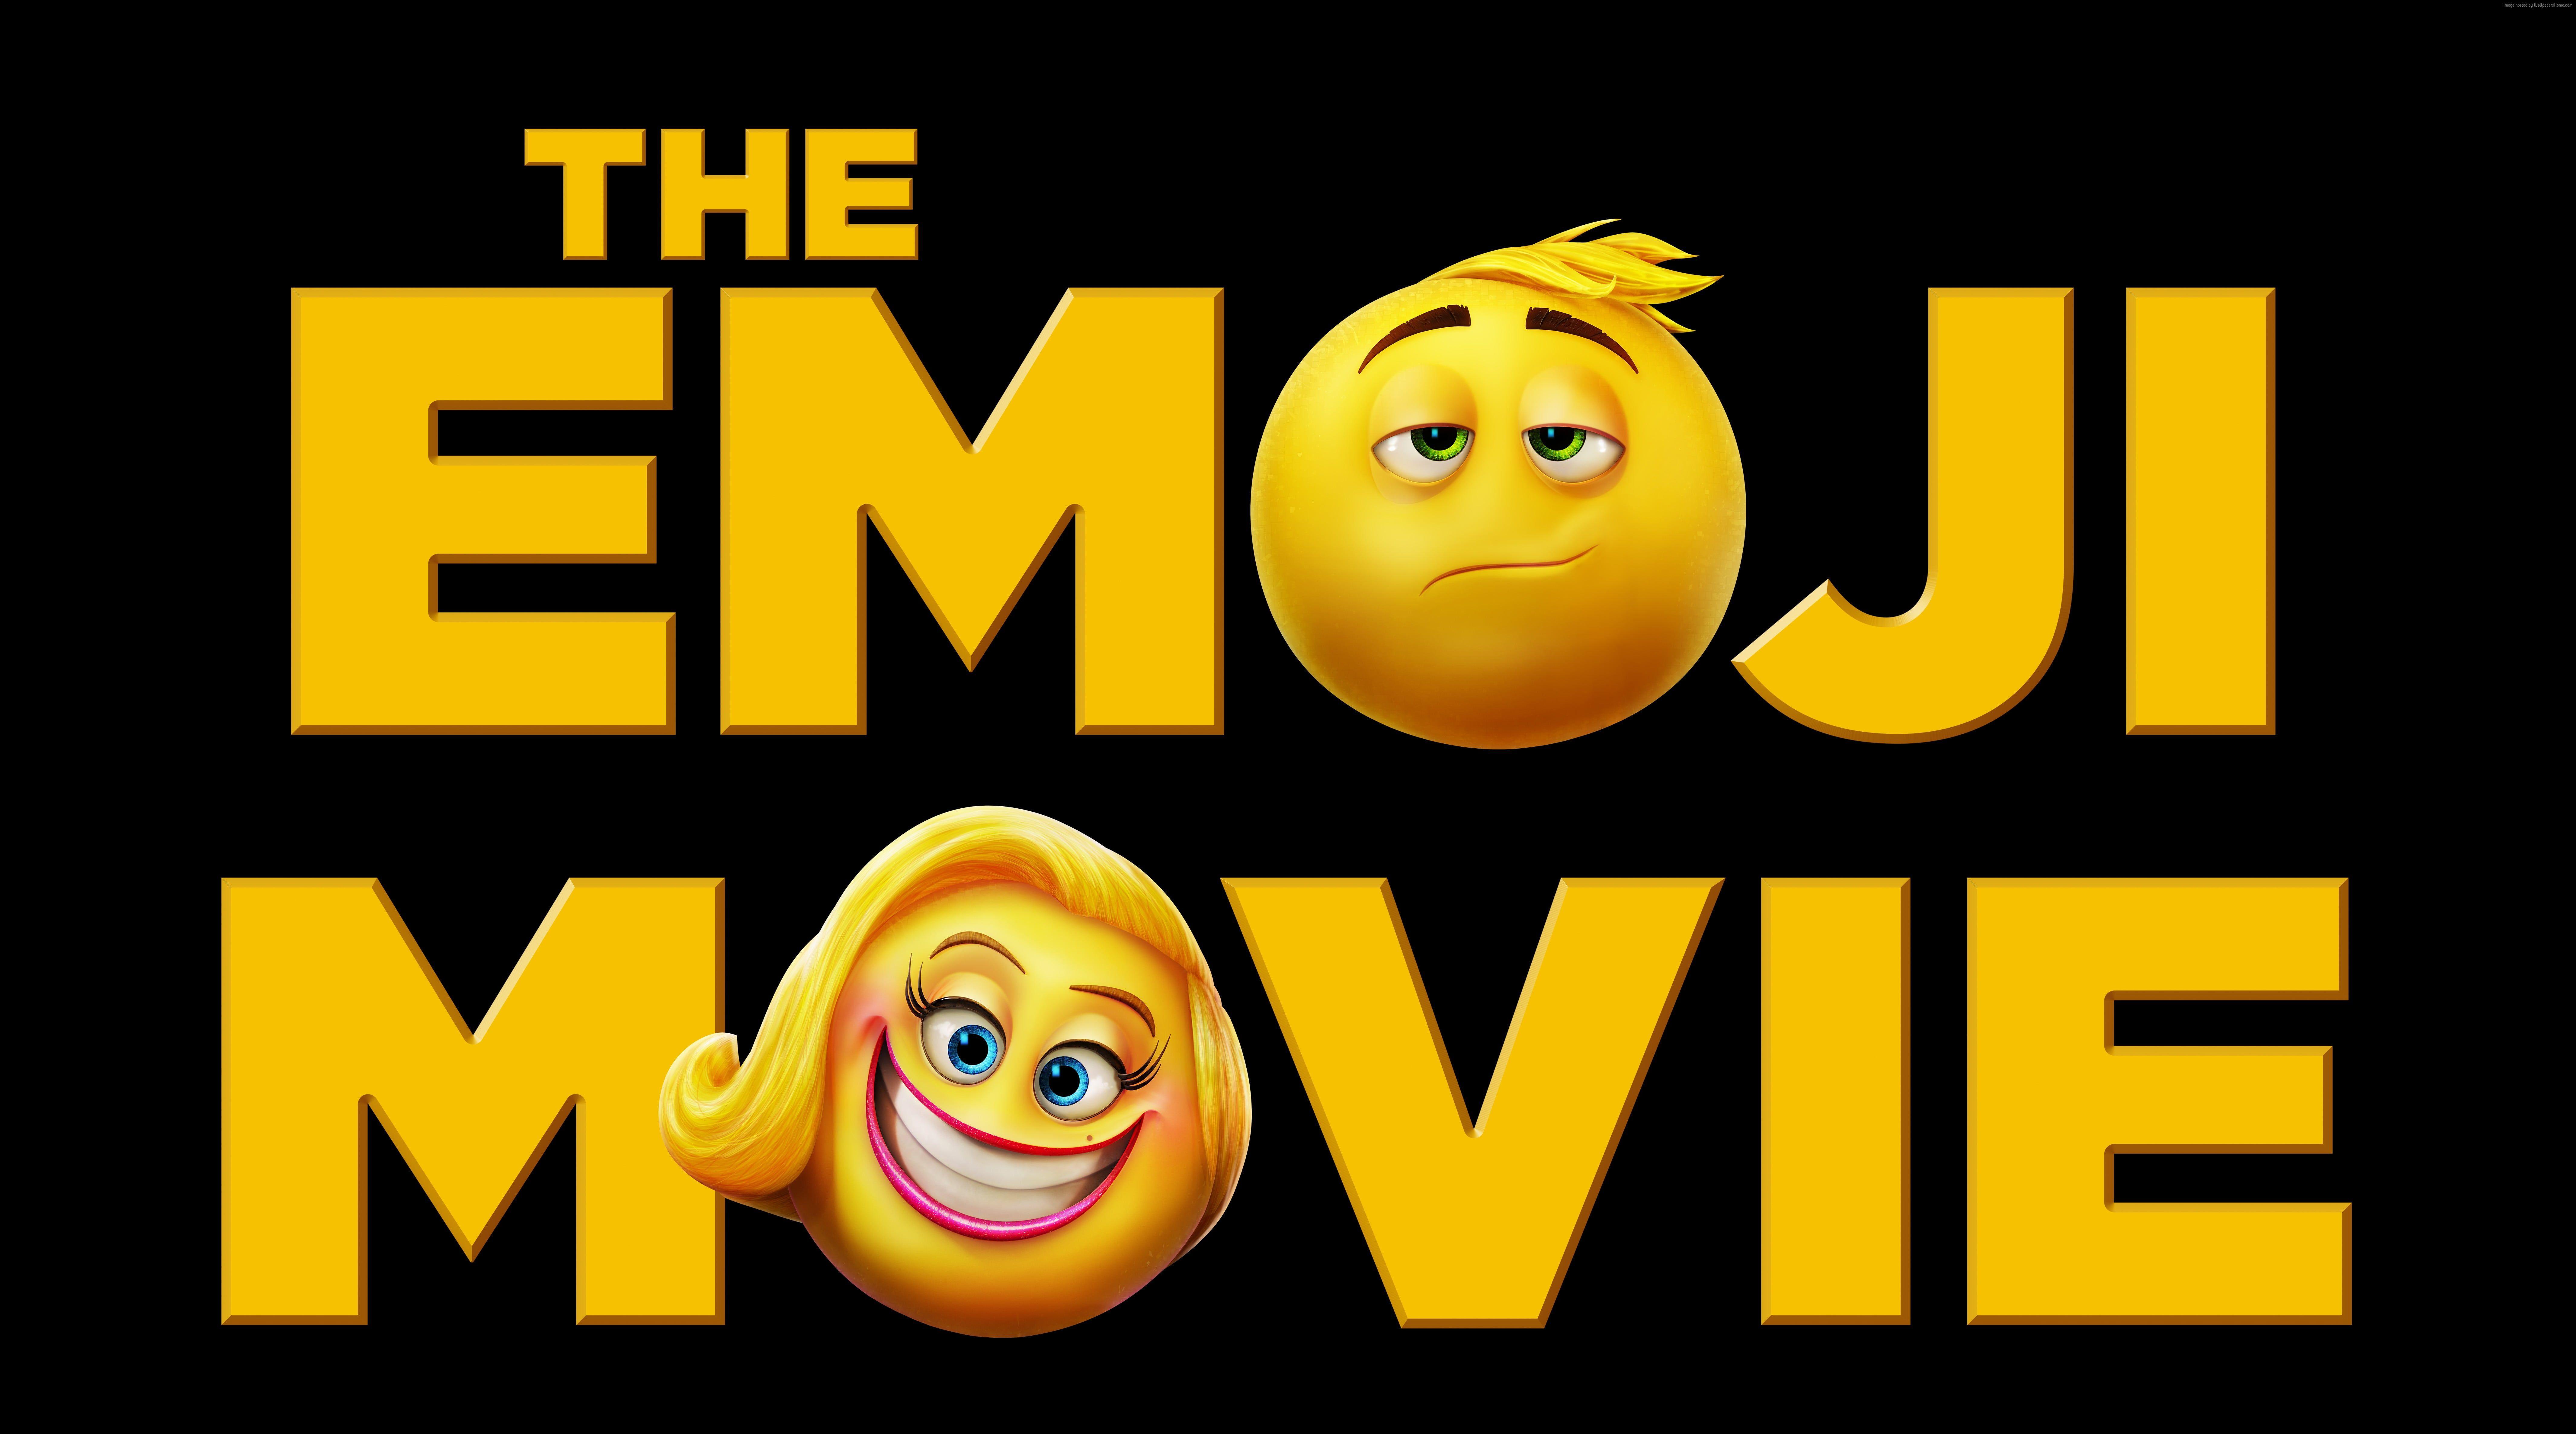 The Emoji Movie text on black background HD wallpaper. Wallpaper